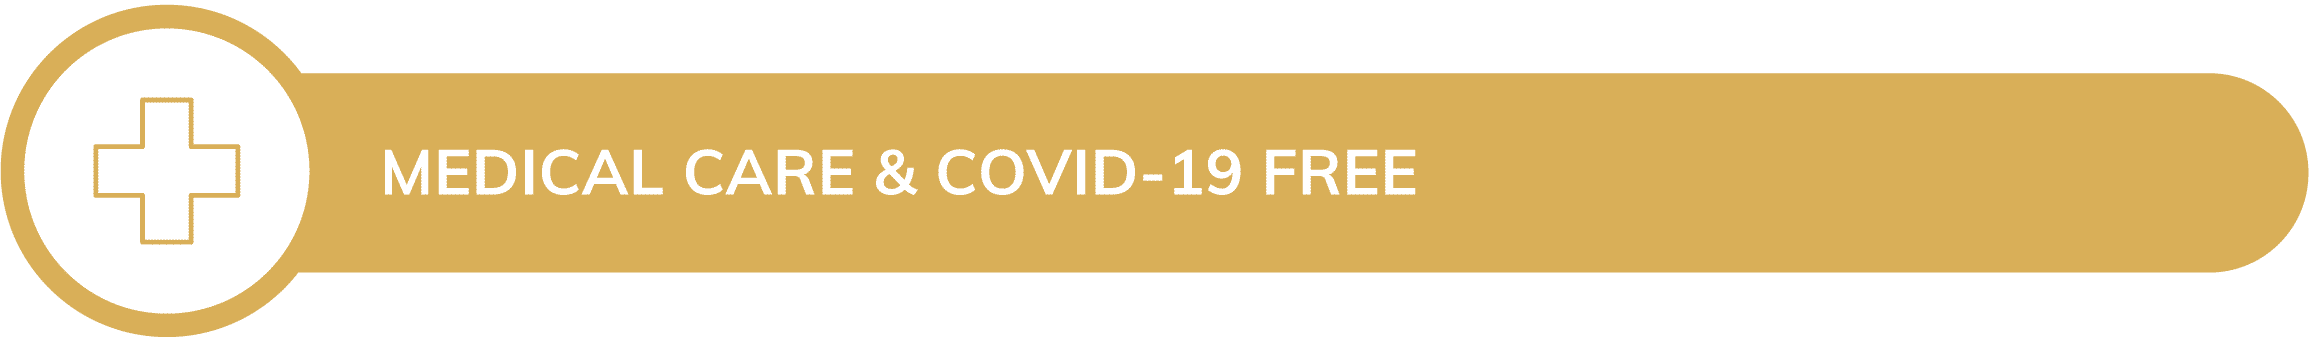 Medical Care & COVID-19 Free-32